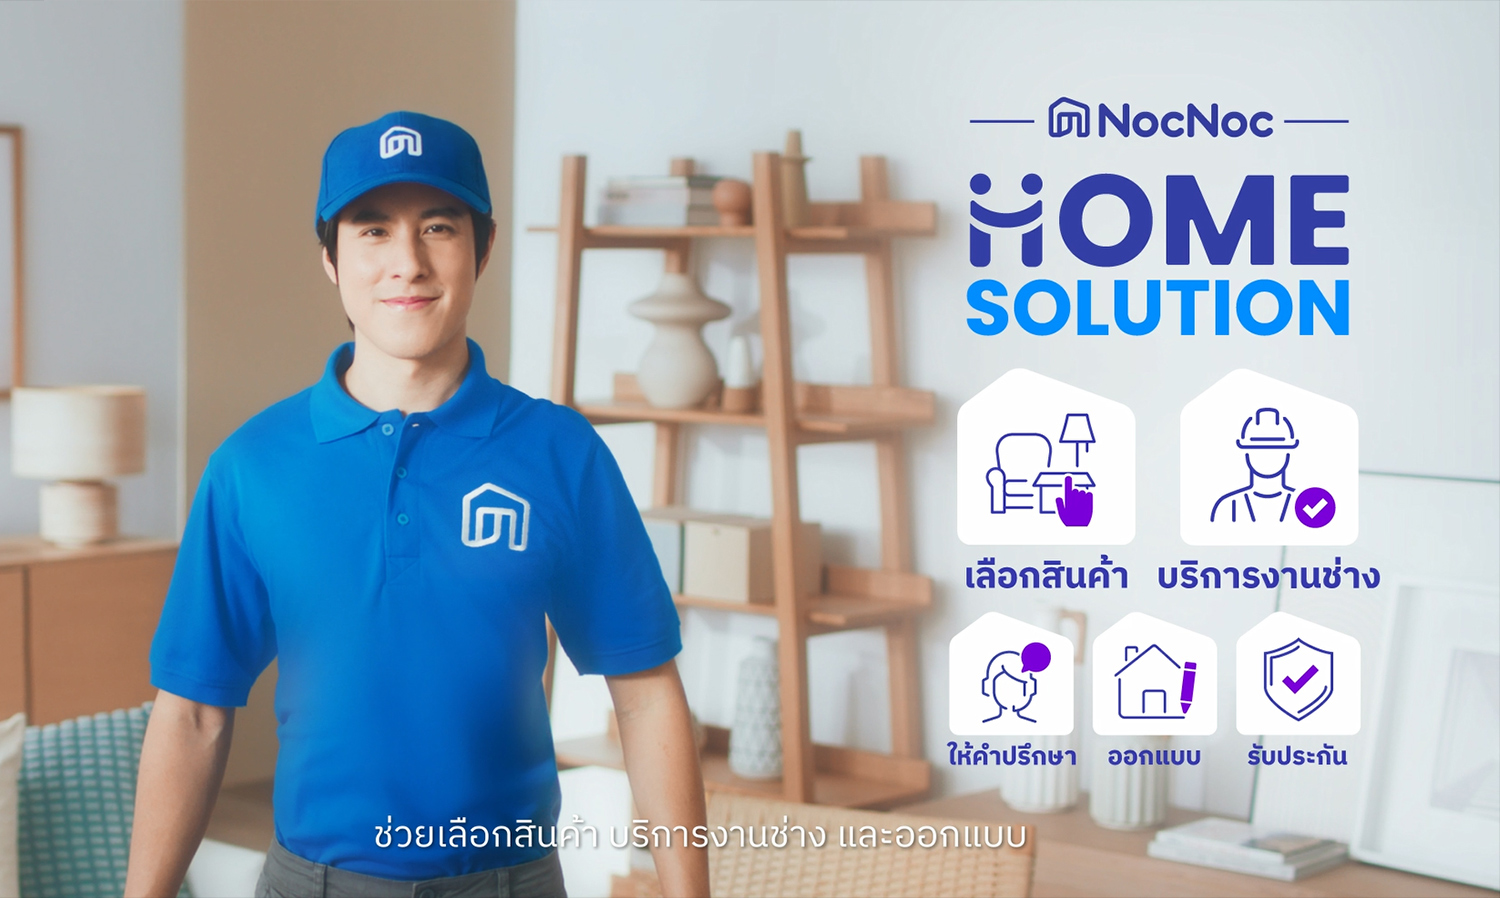 NocNoc รุกตลาด Home and Living ชู “NocNoc Home Solution” เสริมทัพความครบครันแบบ One Stop Service